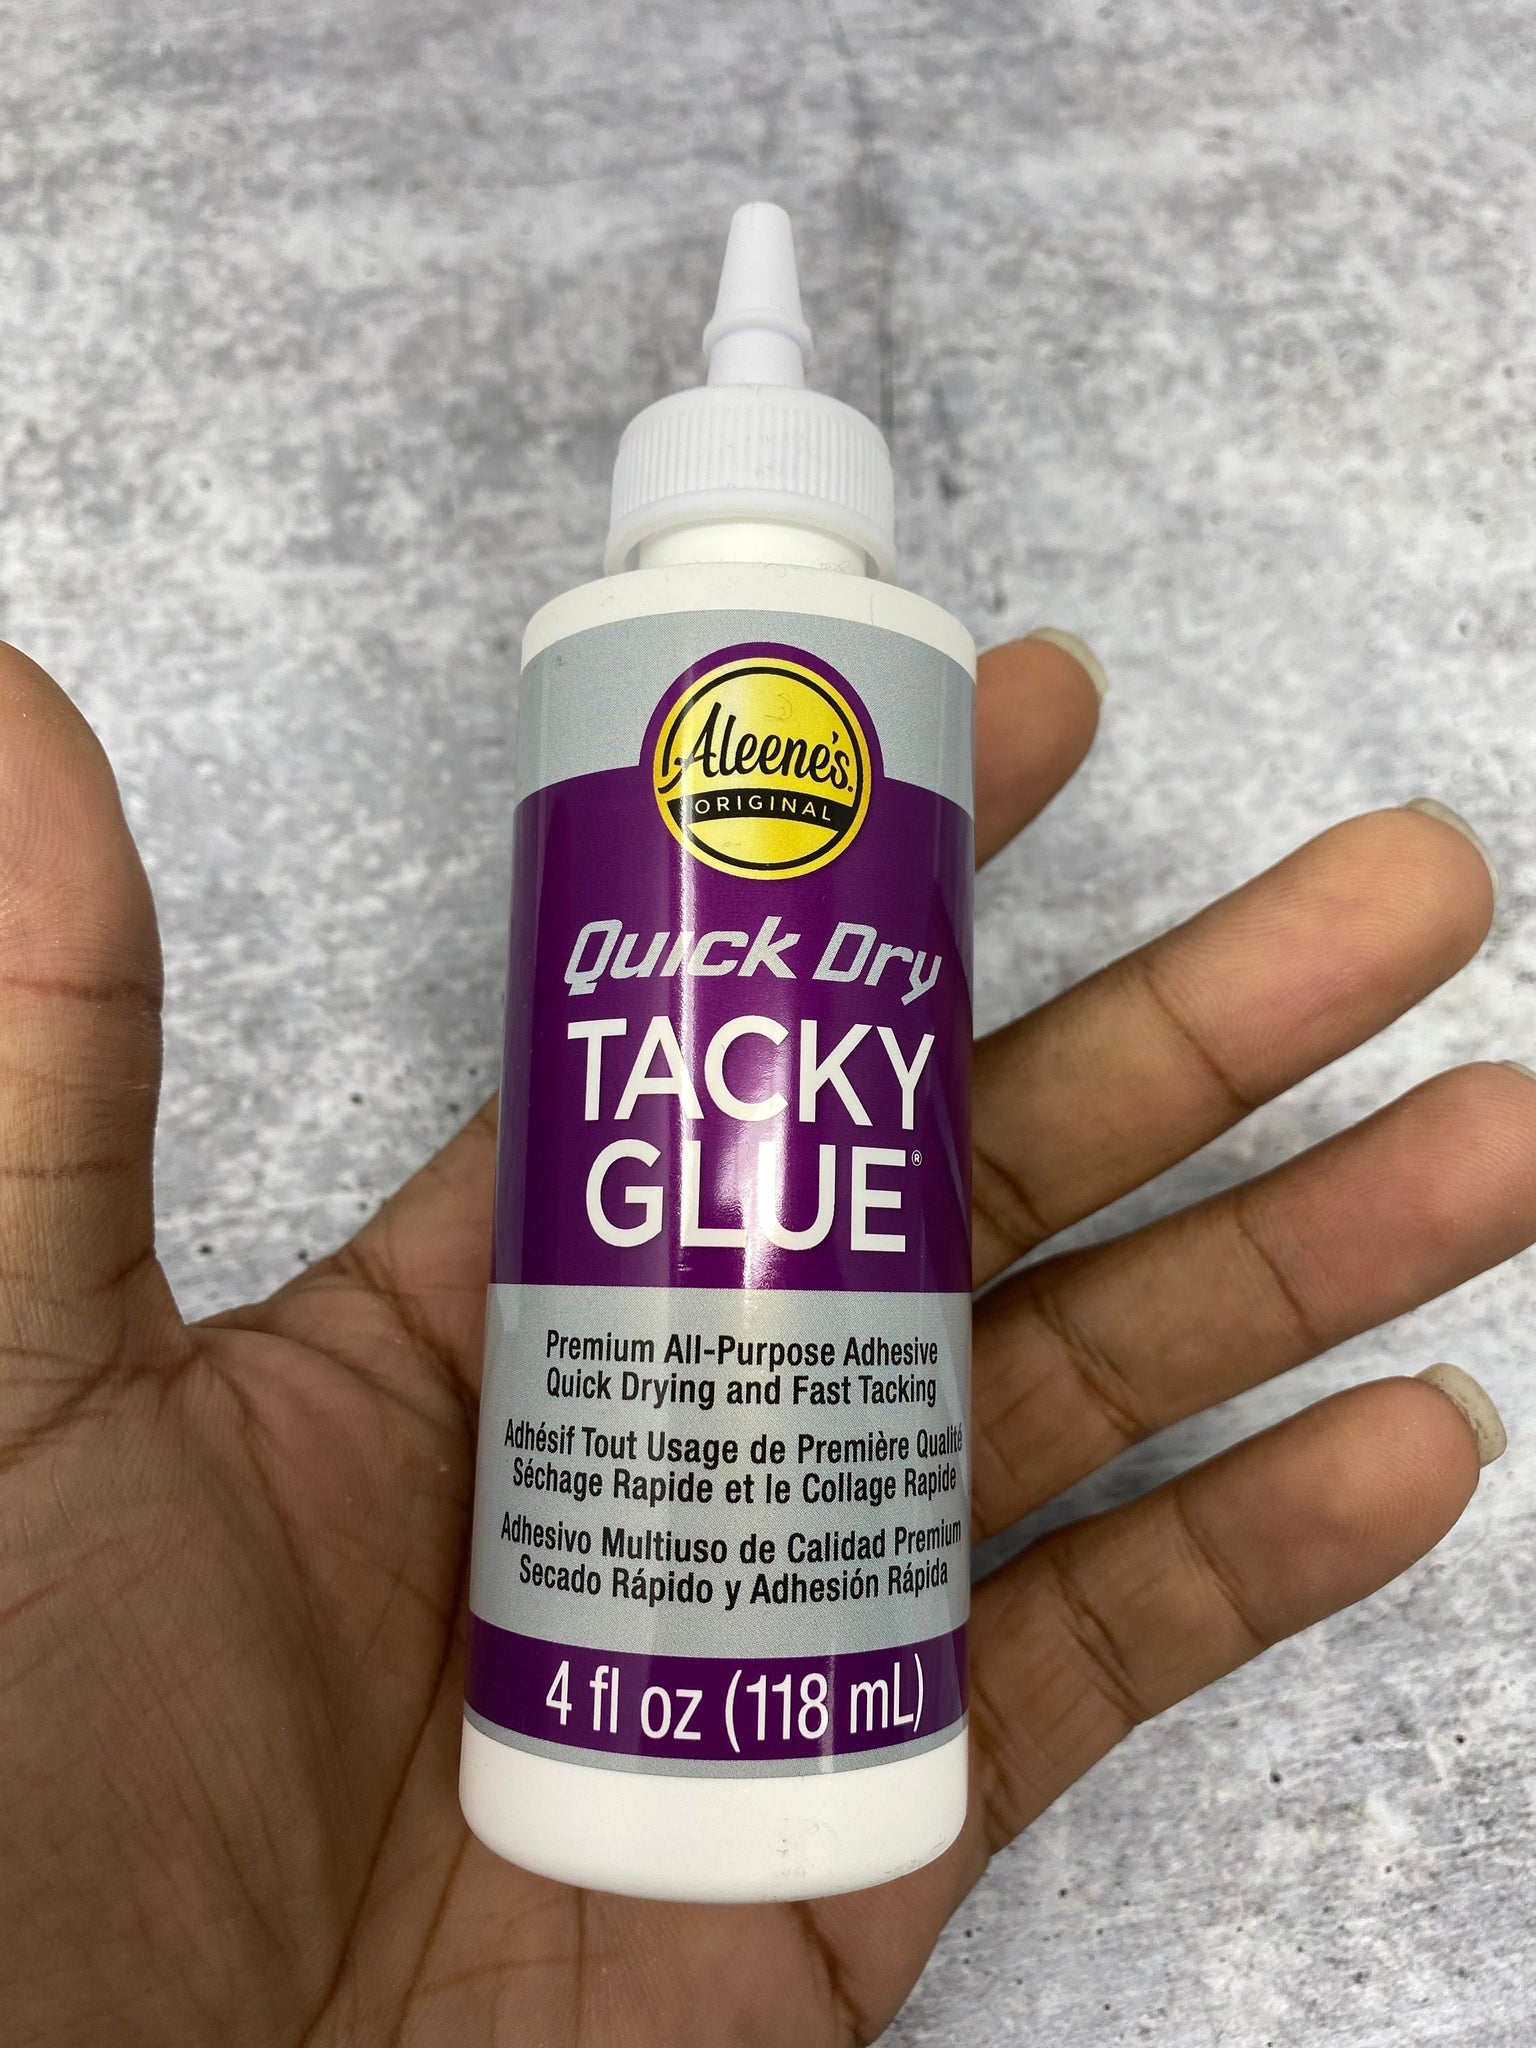 Aleene's Always Ready Fast Grab Tacky Glue 4 oz.